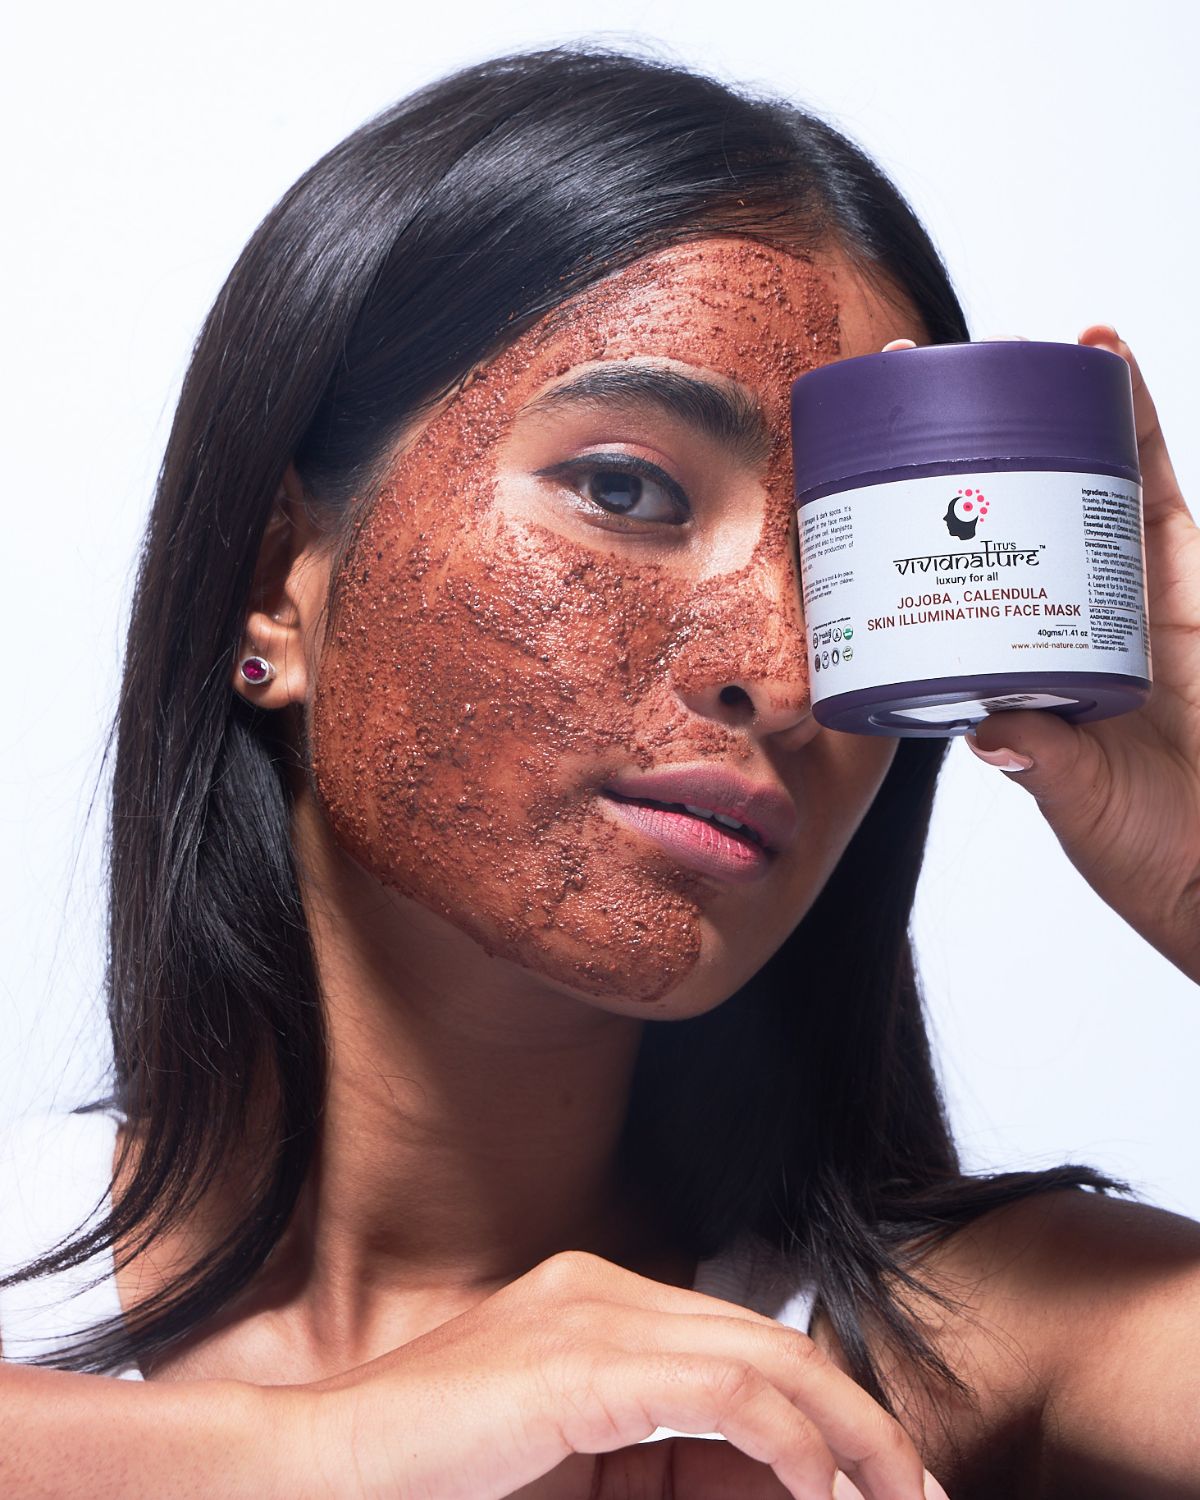 Jojoba Calendula face Mask | Natural Face Glow Mask | Best for Skin Illuminating